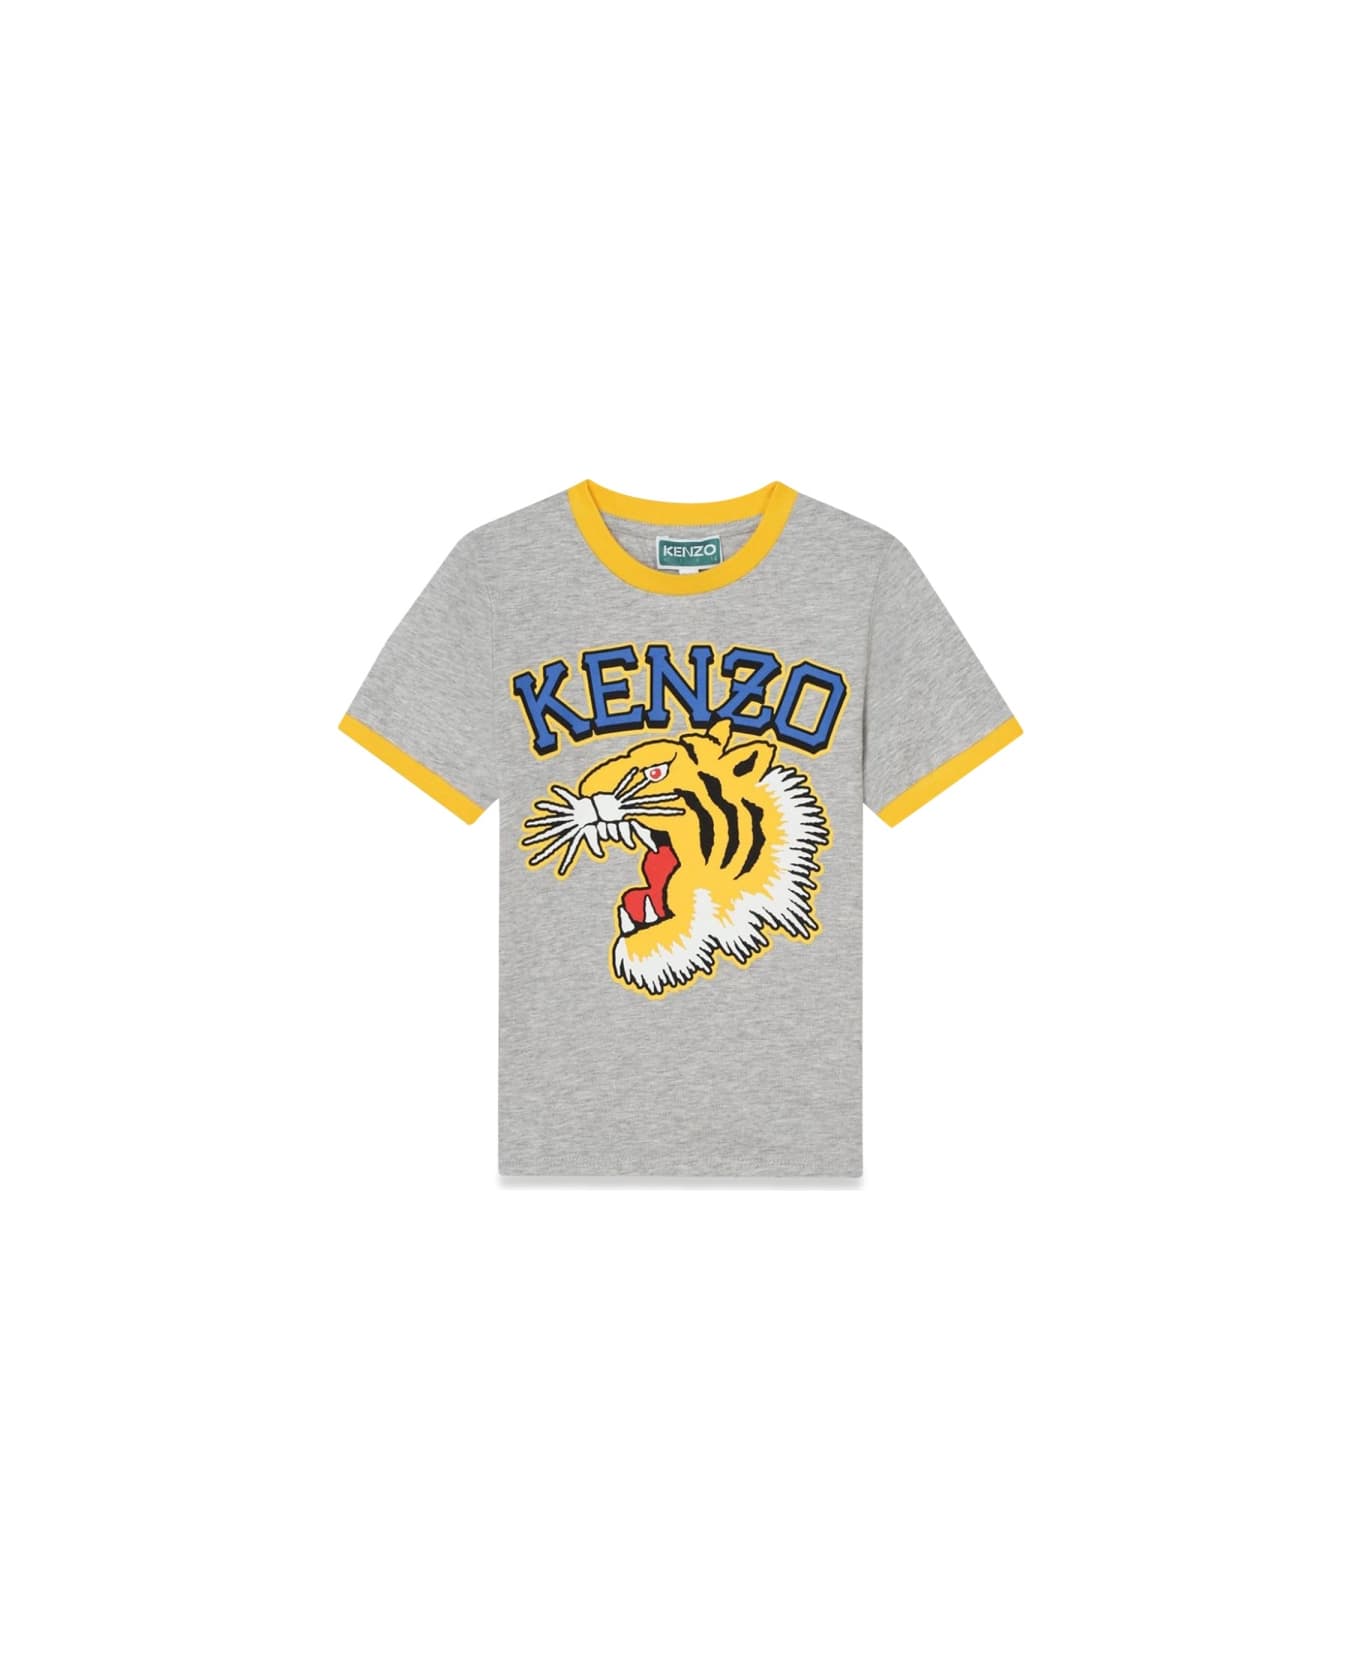 Kenzo Tee Shirt - GREY